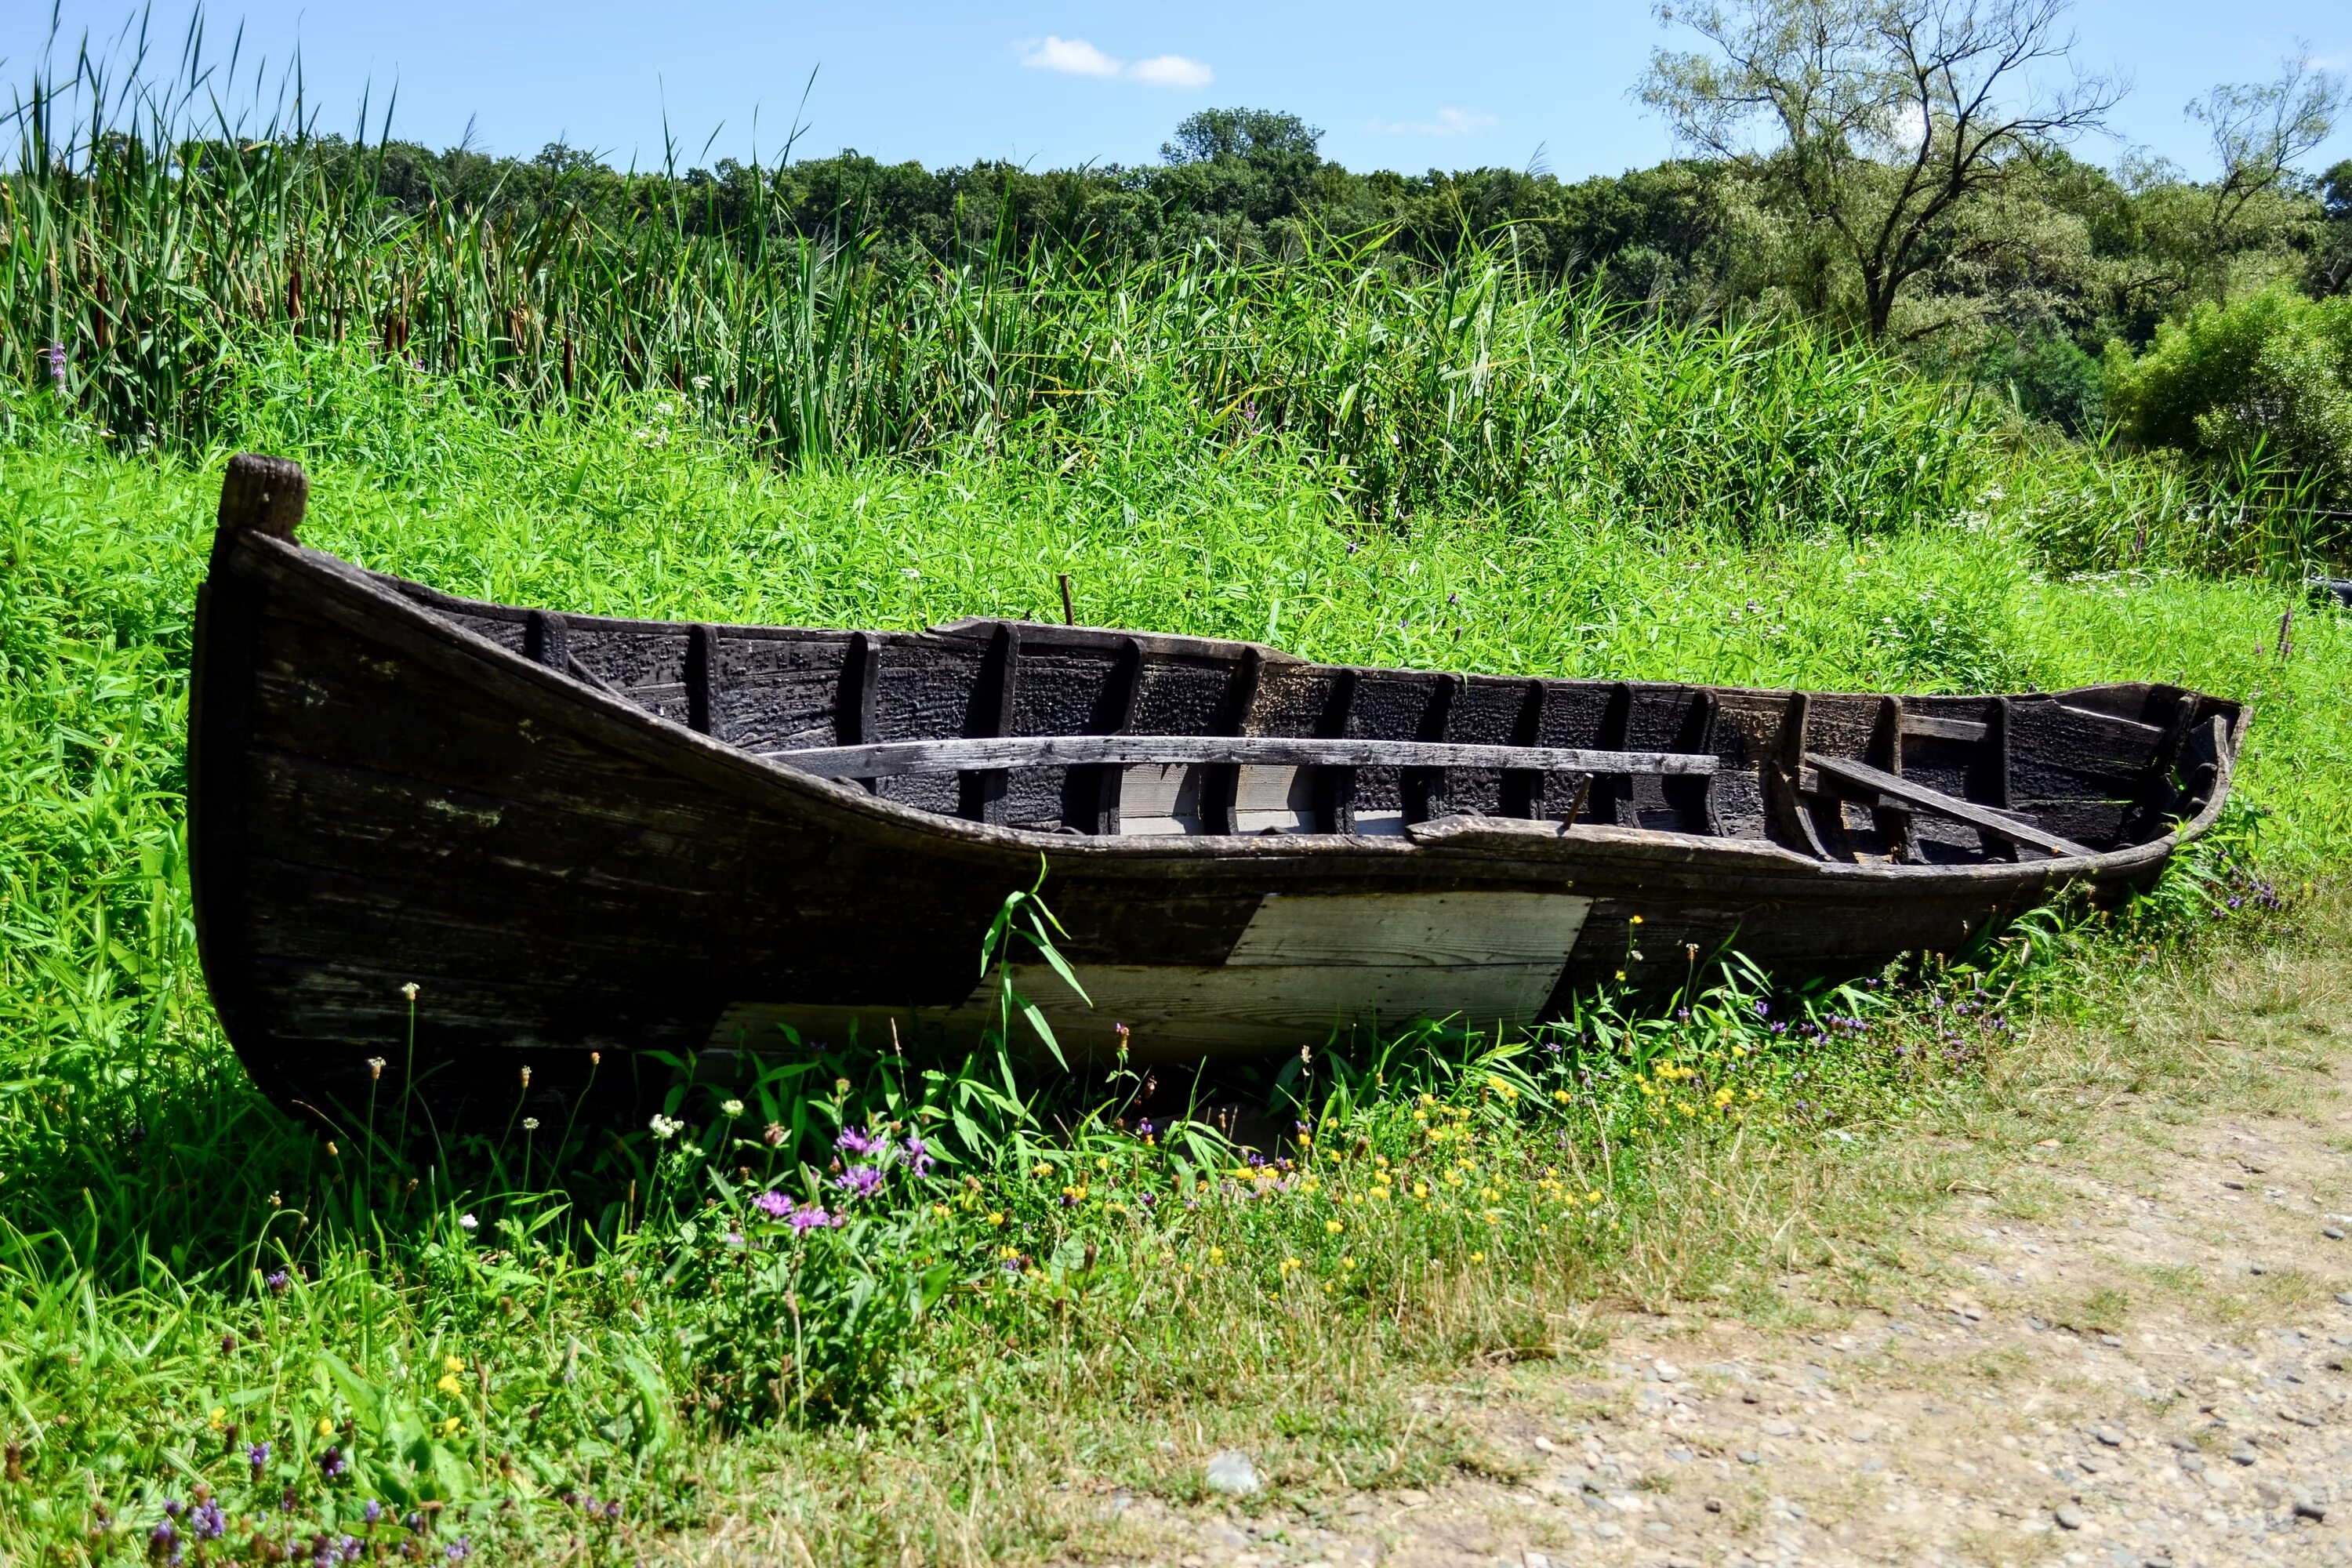 Паруса весел лодочки растения. Древняя лодка. Старая деревянная лодка. Лодка деревянная старинная. Древние деревянные лодки.